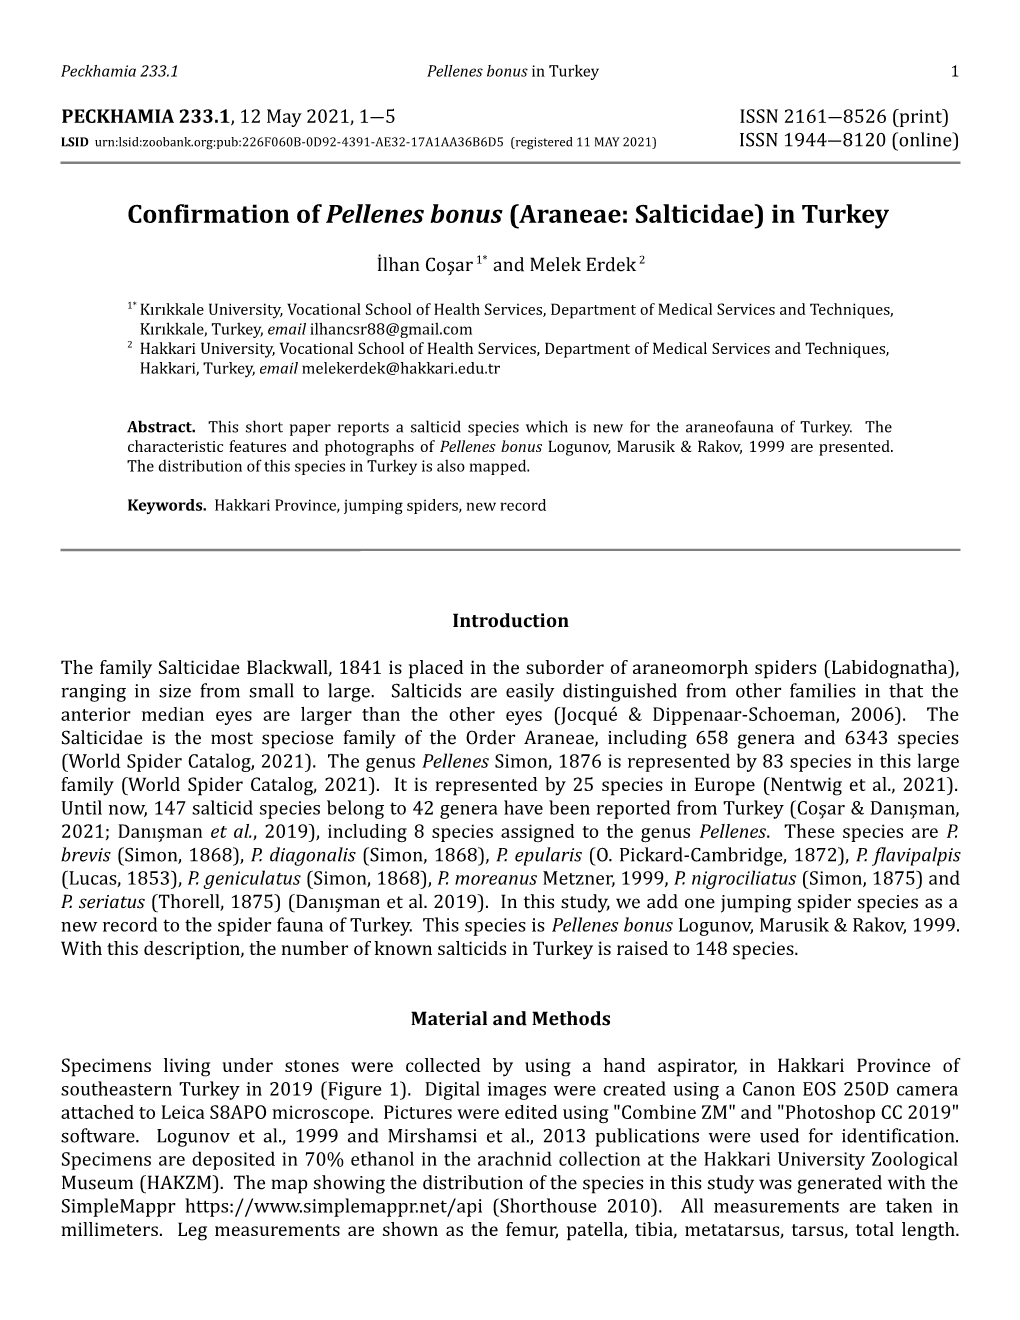 Confirmation of Pellenes Bonus (Araneae: Salticidae) in Turkey